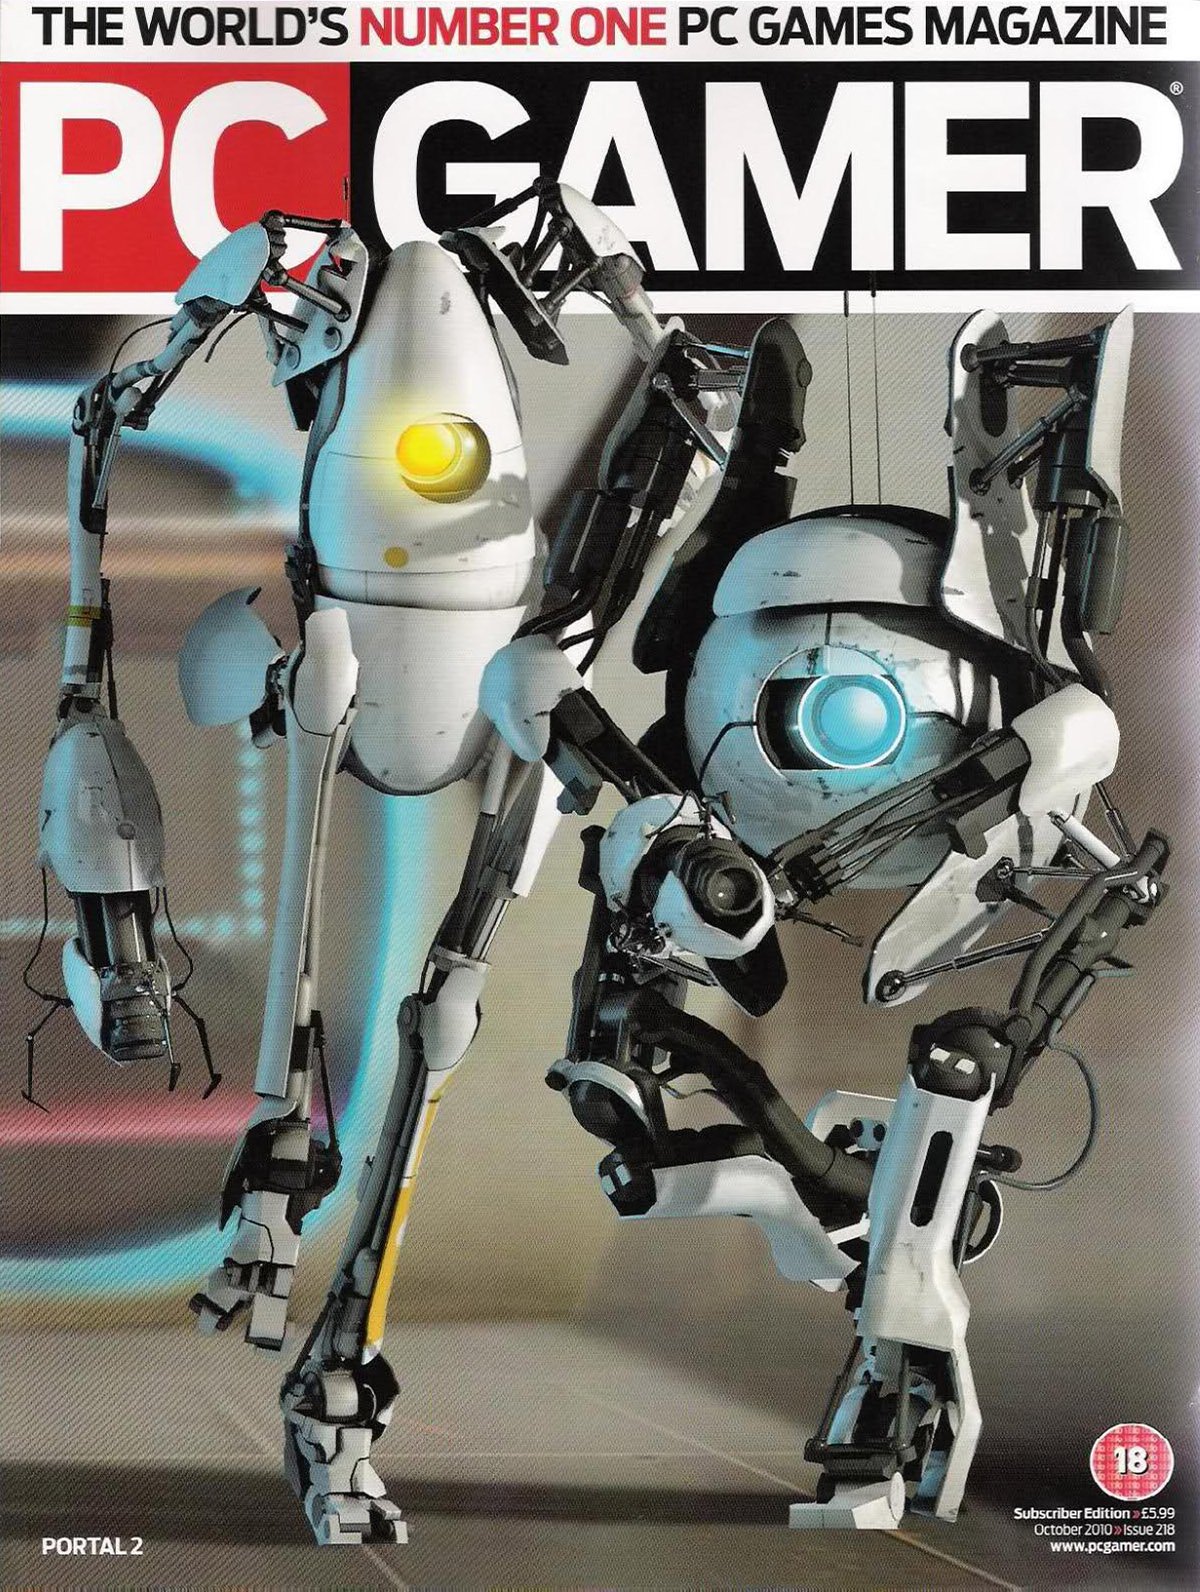 PC Gamer UK 218 October 2010 (subscriber edition)